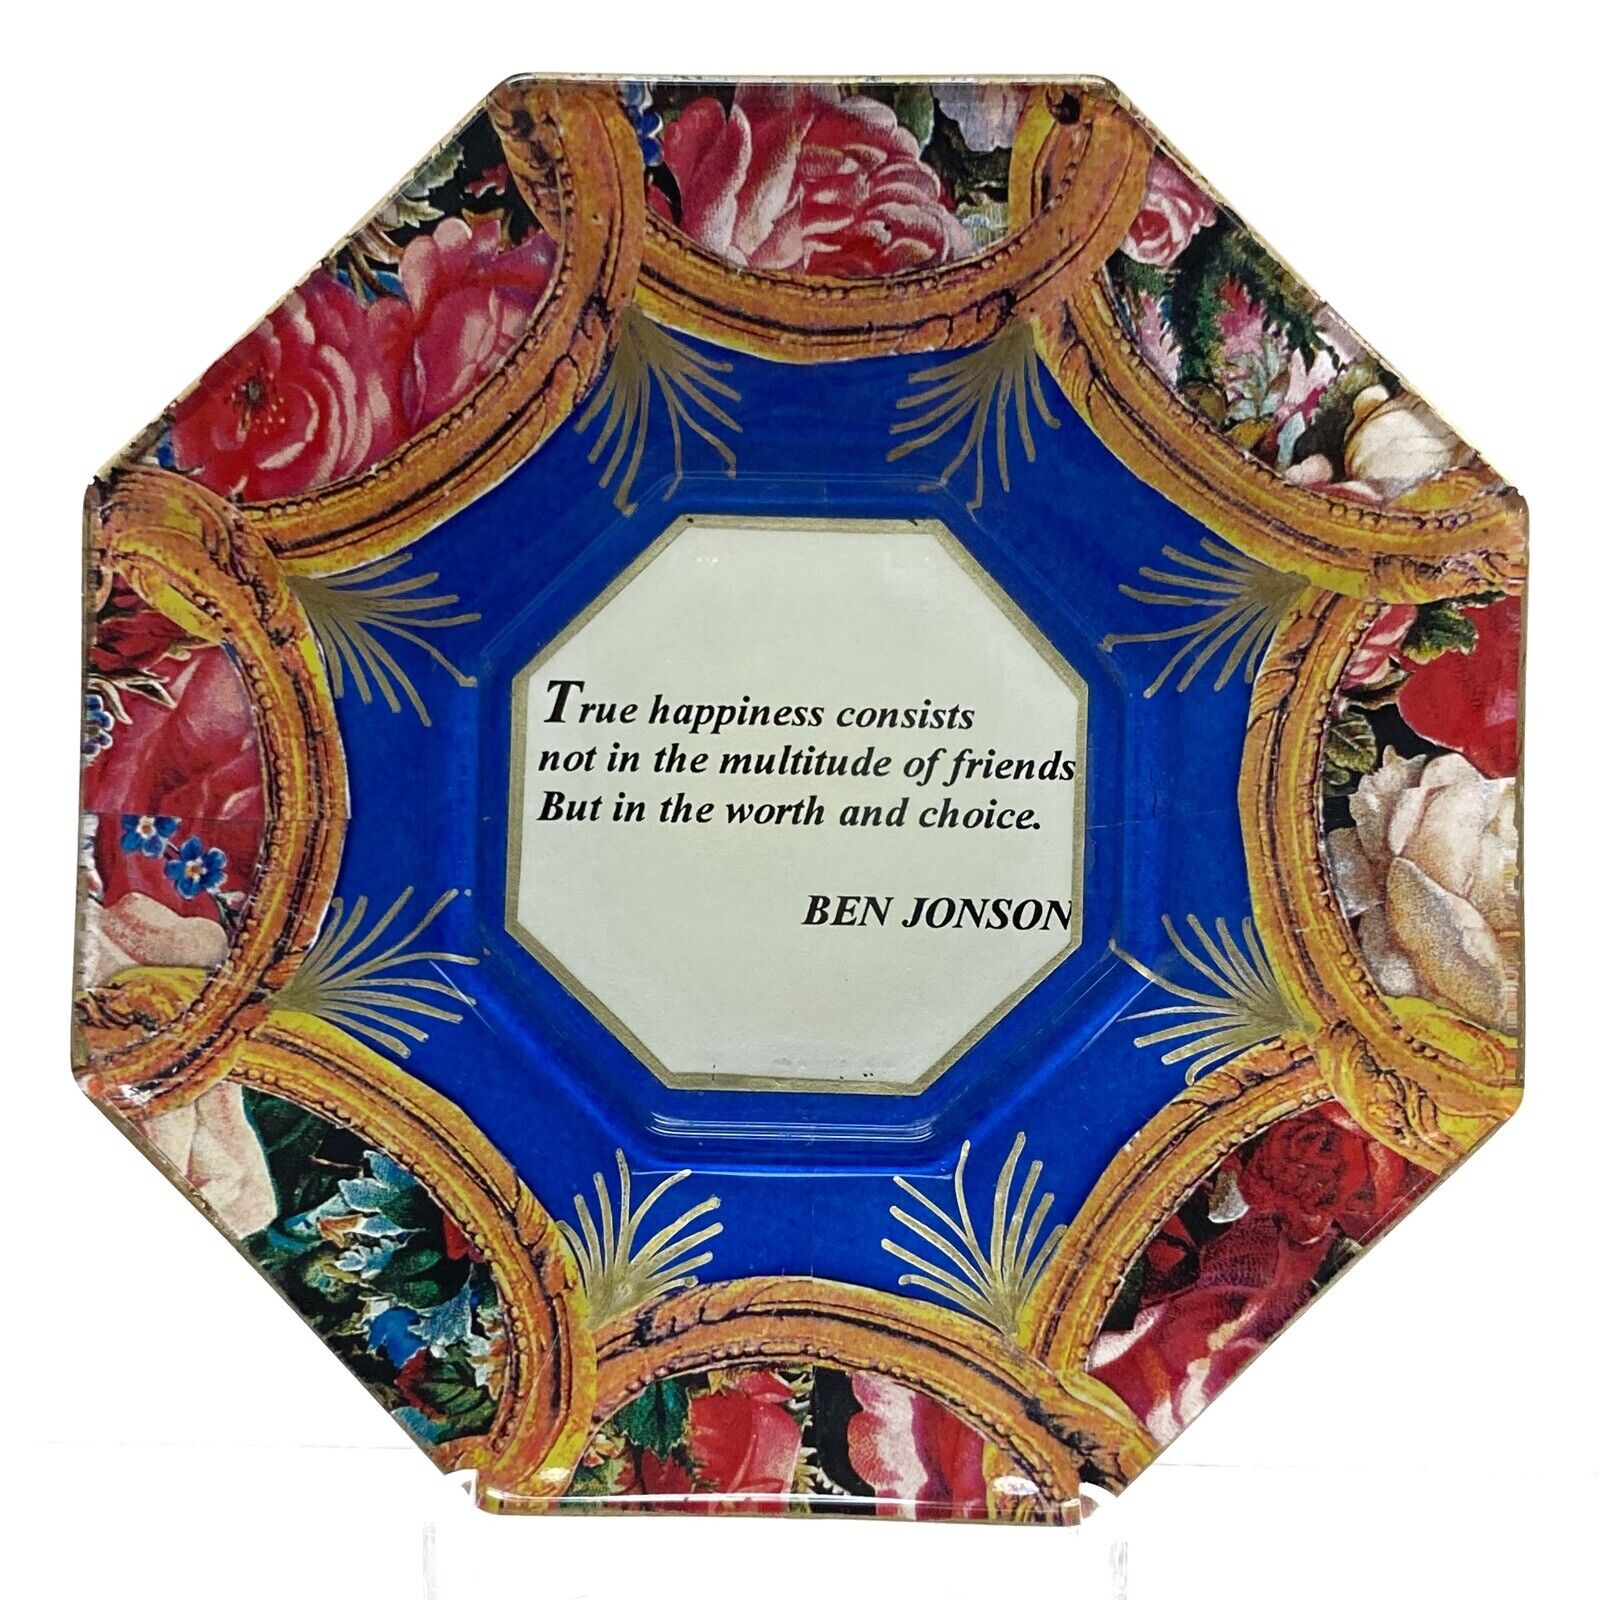 Durwin Rice New York Artist Signed Decoupage Plate Friendship Quote Ben Jonson